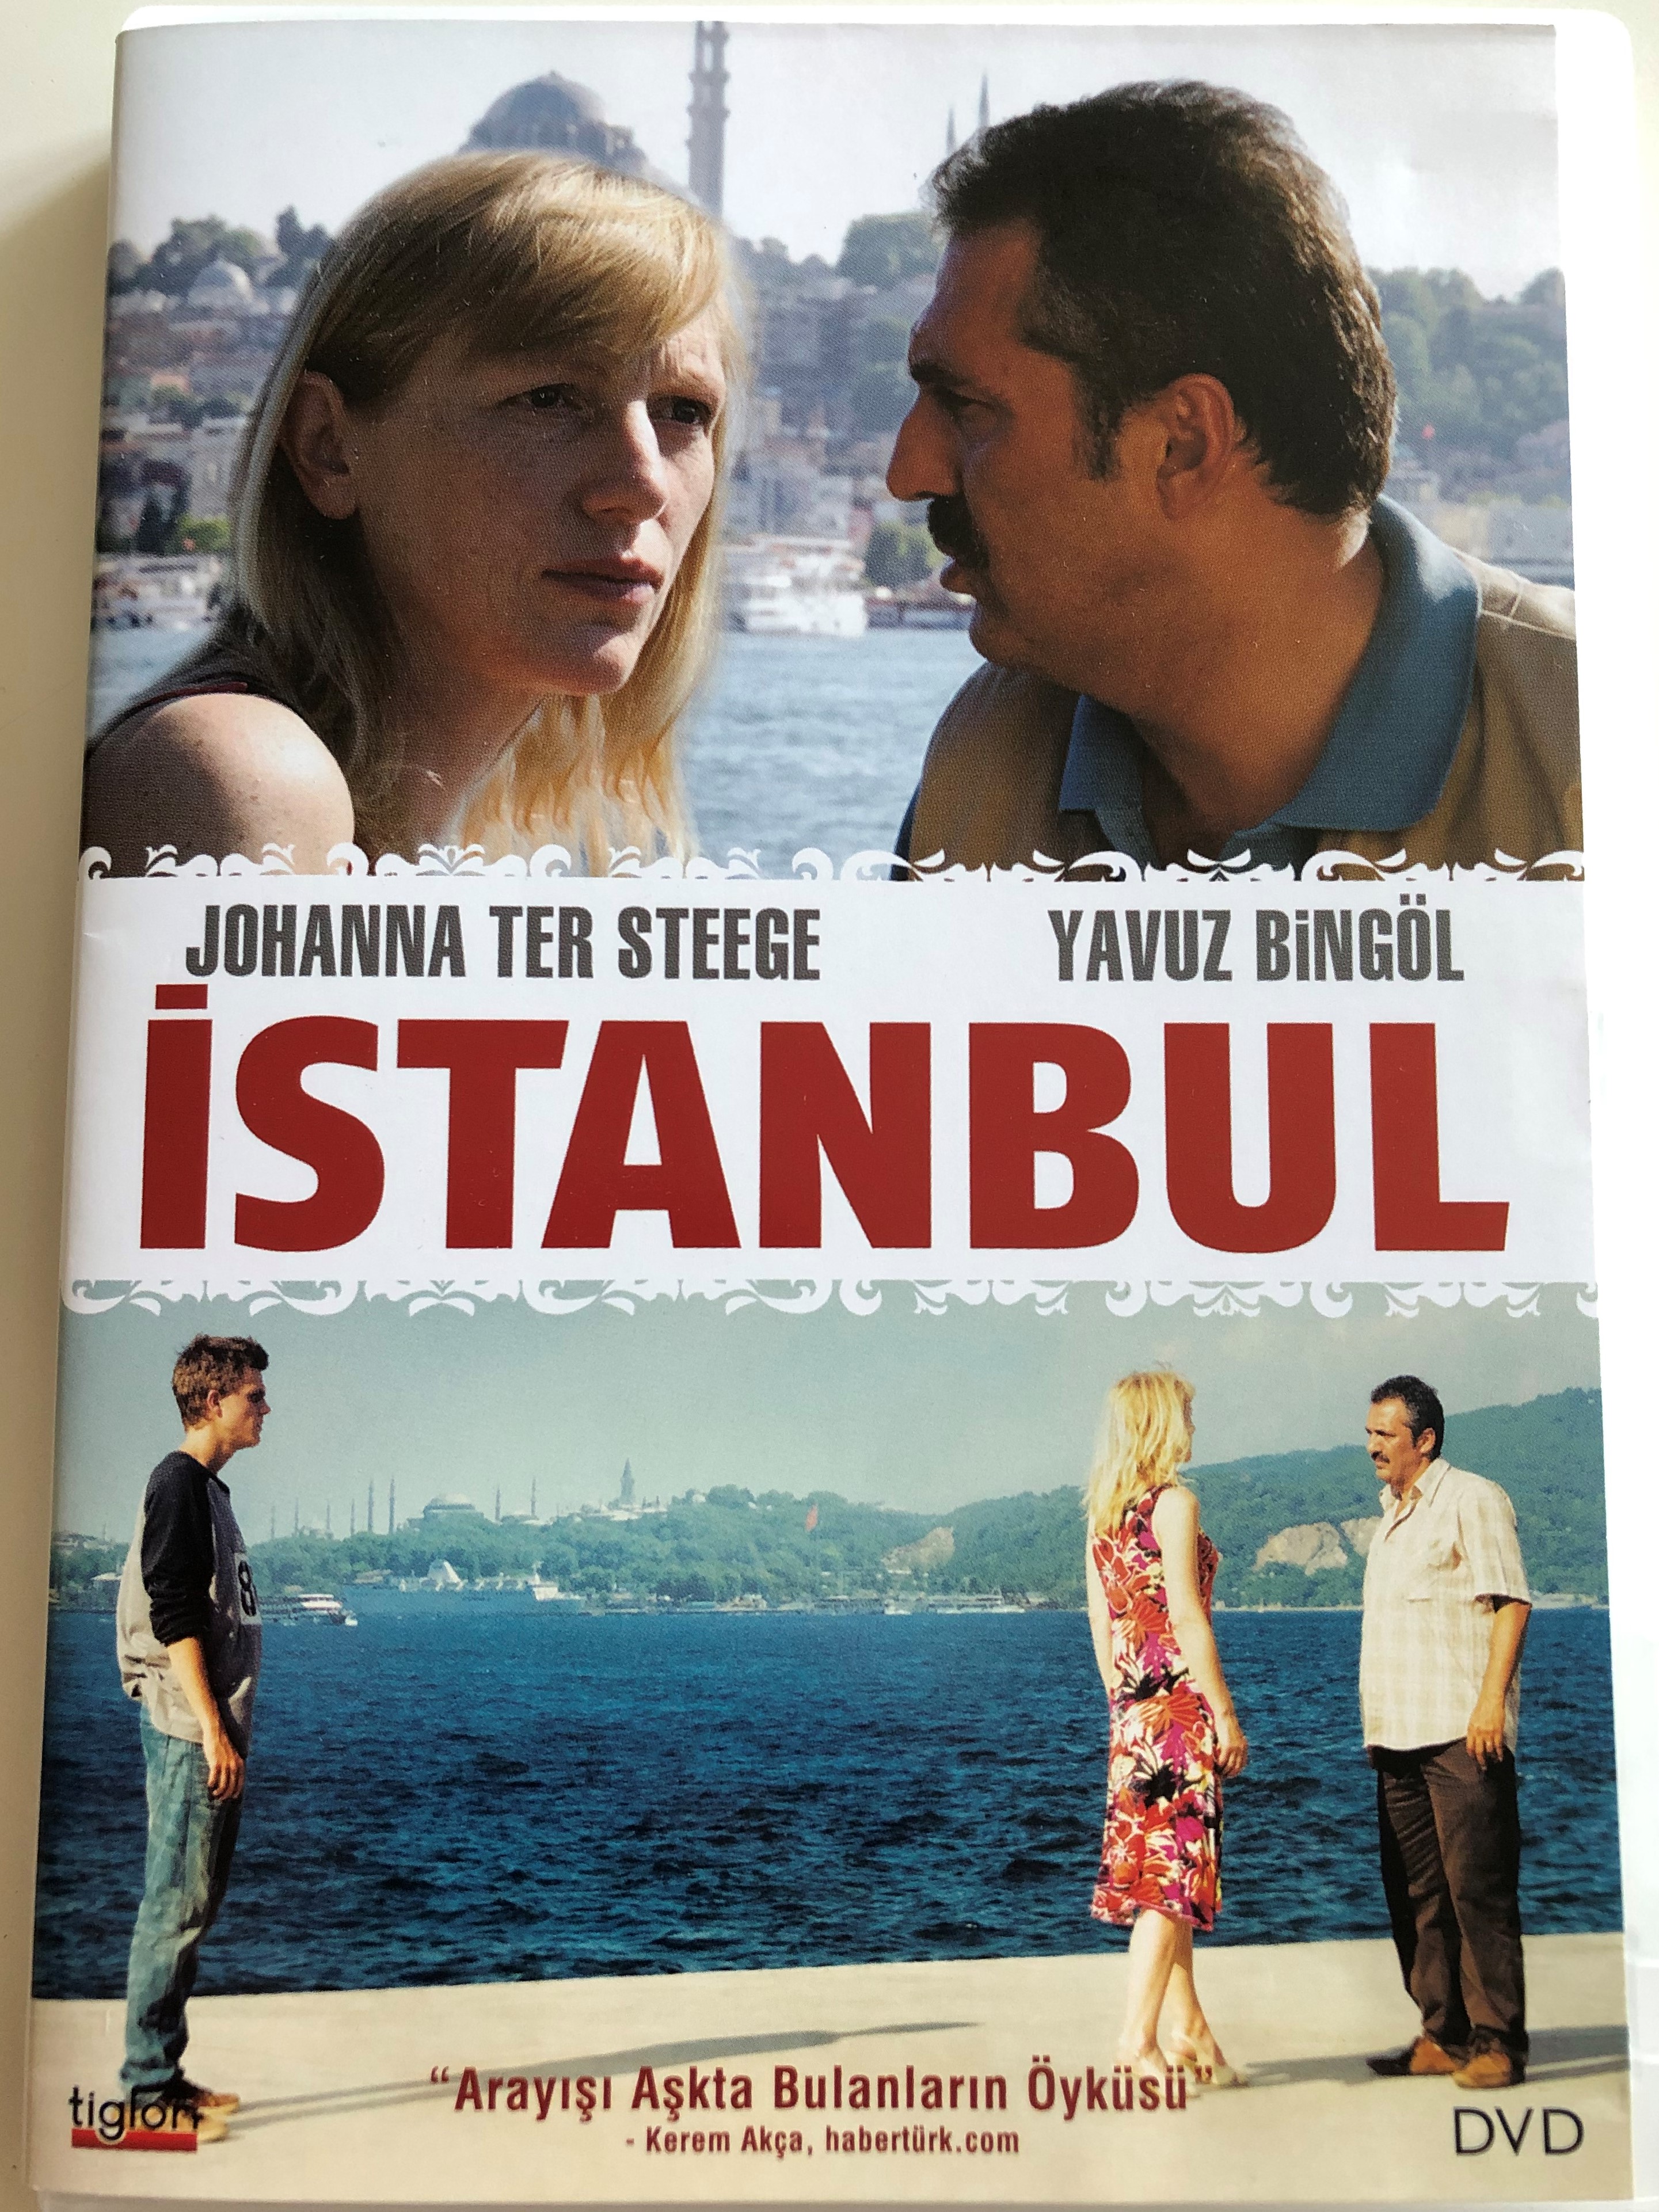 isztambul-dvd-2011-istambul-directed-by-ferenc-t-r-k-starring-johanna-ter-steegem-yavuz-bing-l-norbert-varga-andor-luk-ts-r-ka-tenki-padraic-delaney-selcuk-uluerg-ven-hungarian-film-1-.jpg